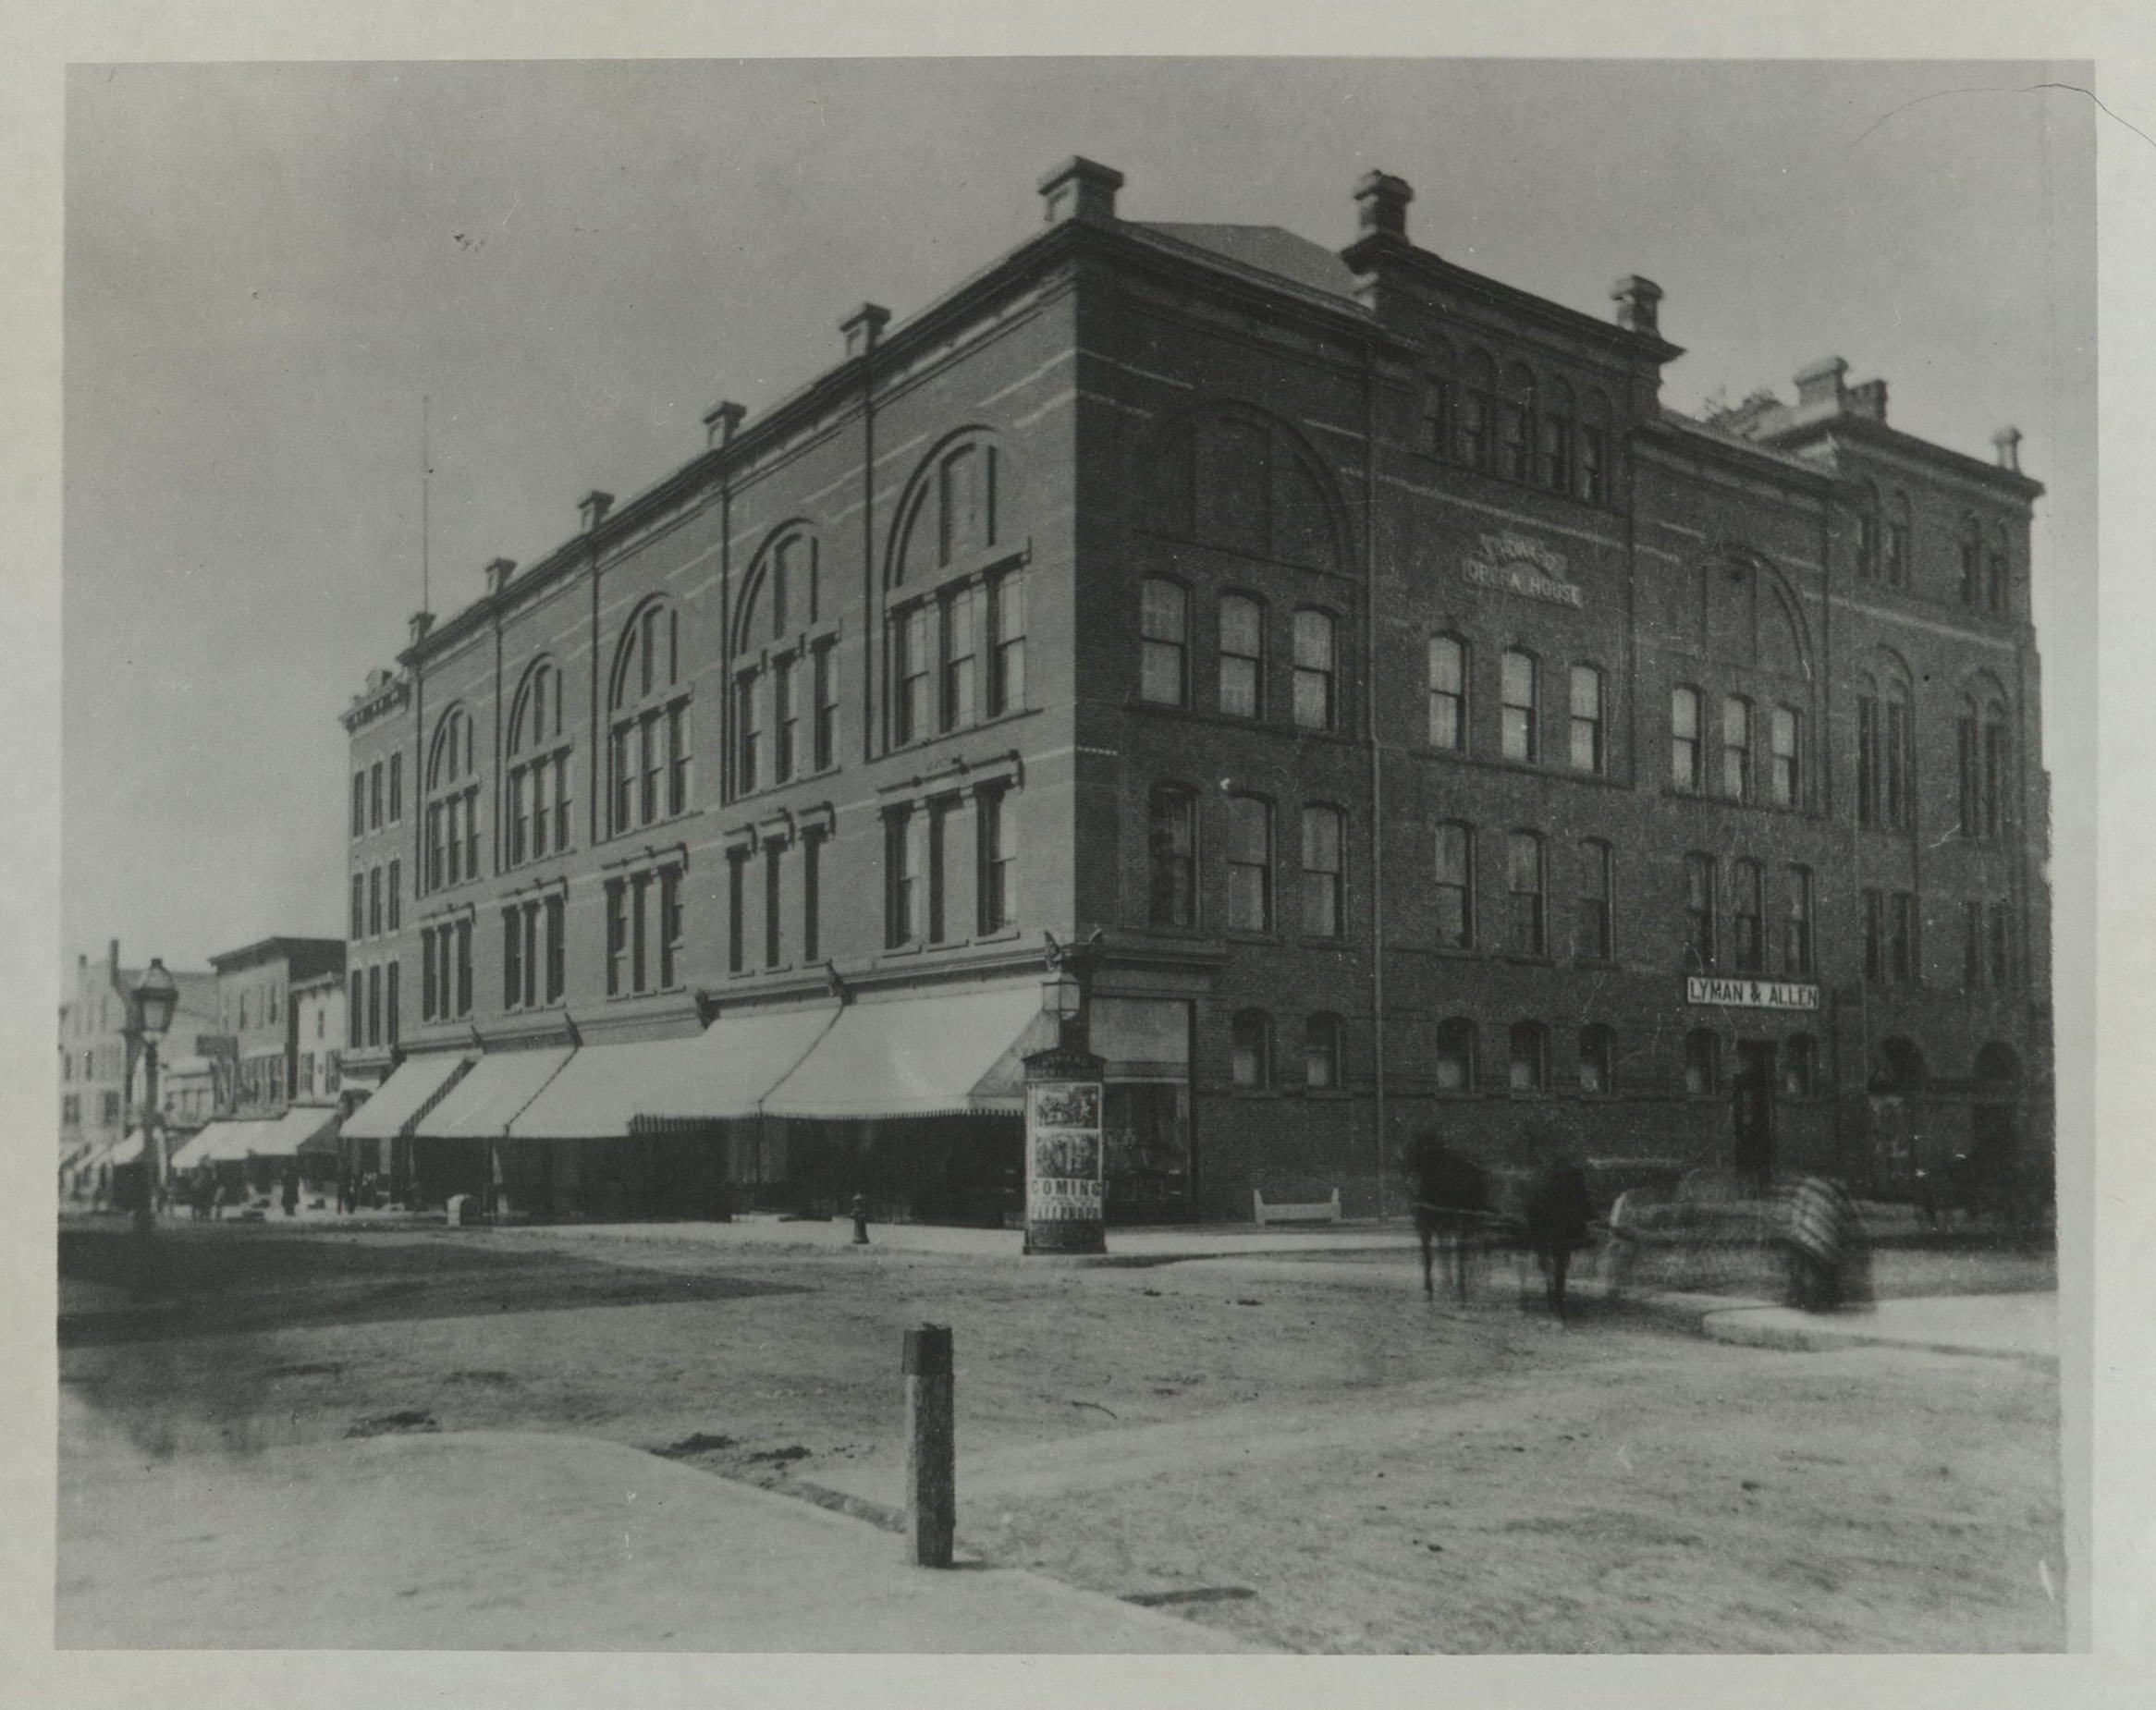 circa 1890s image of the Howard Opera House taken from opposite corner